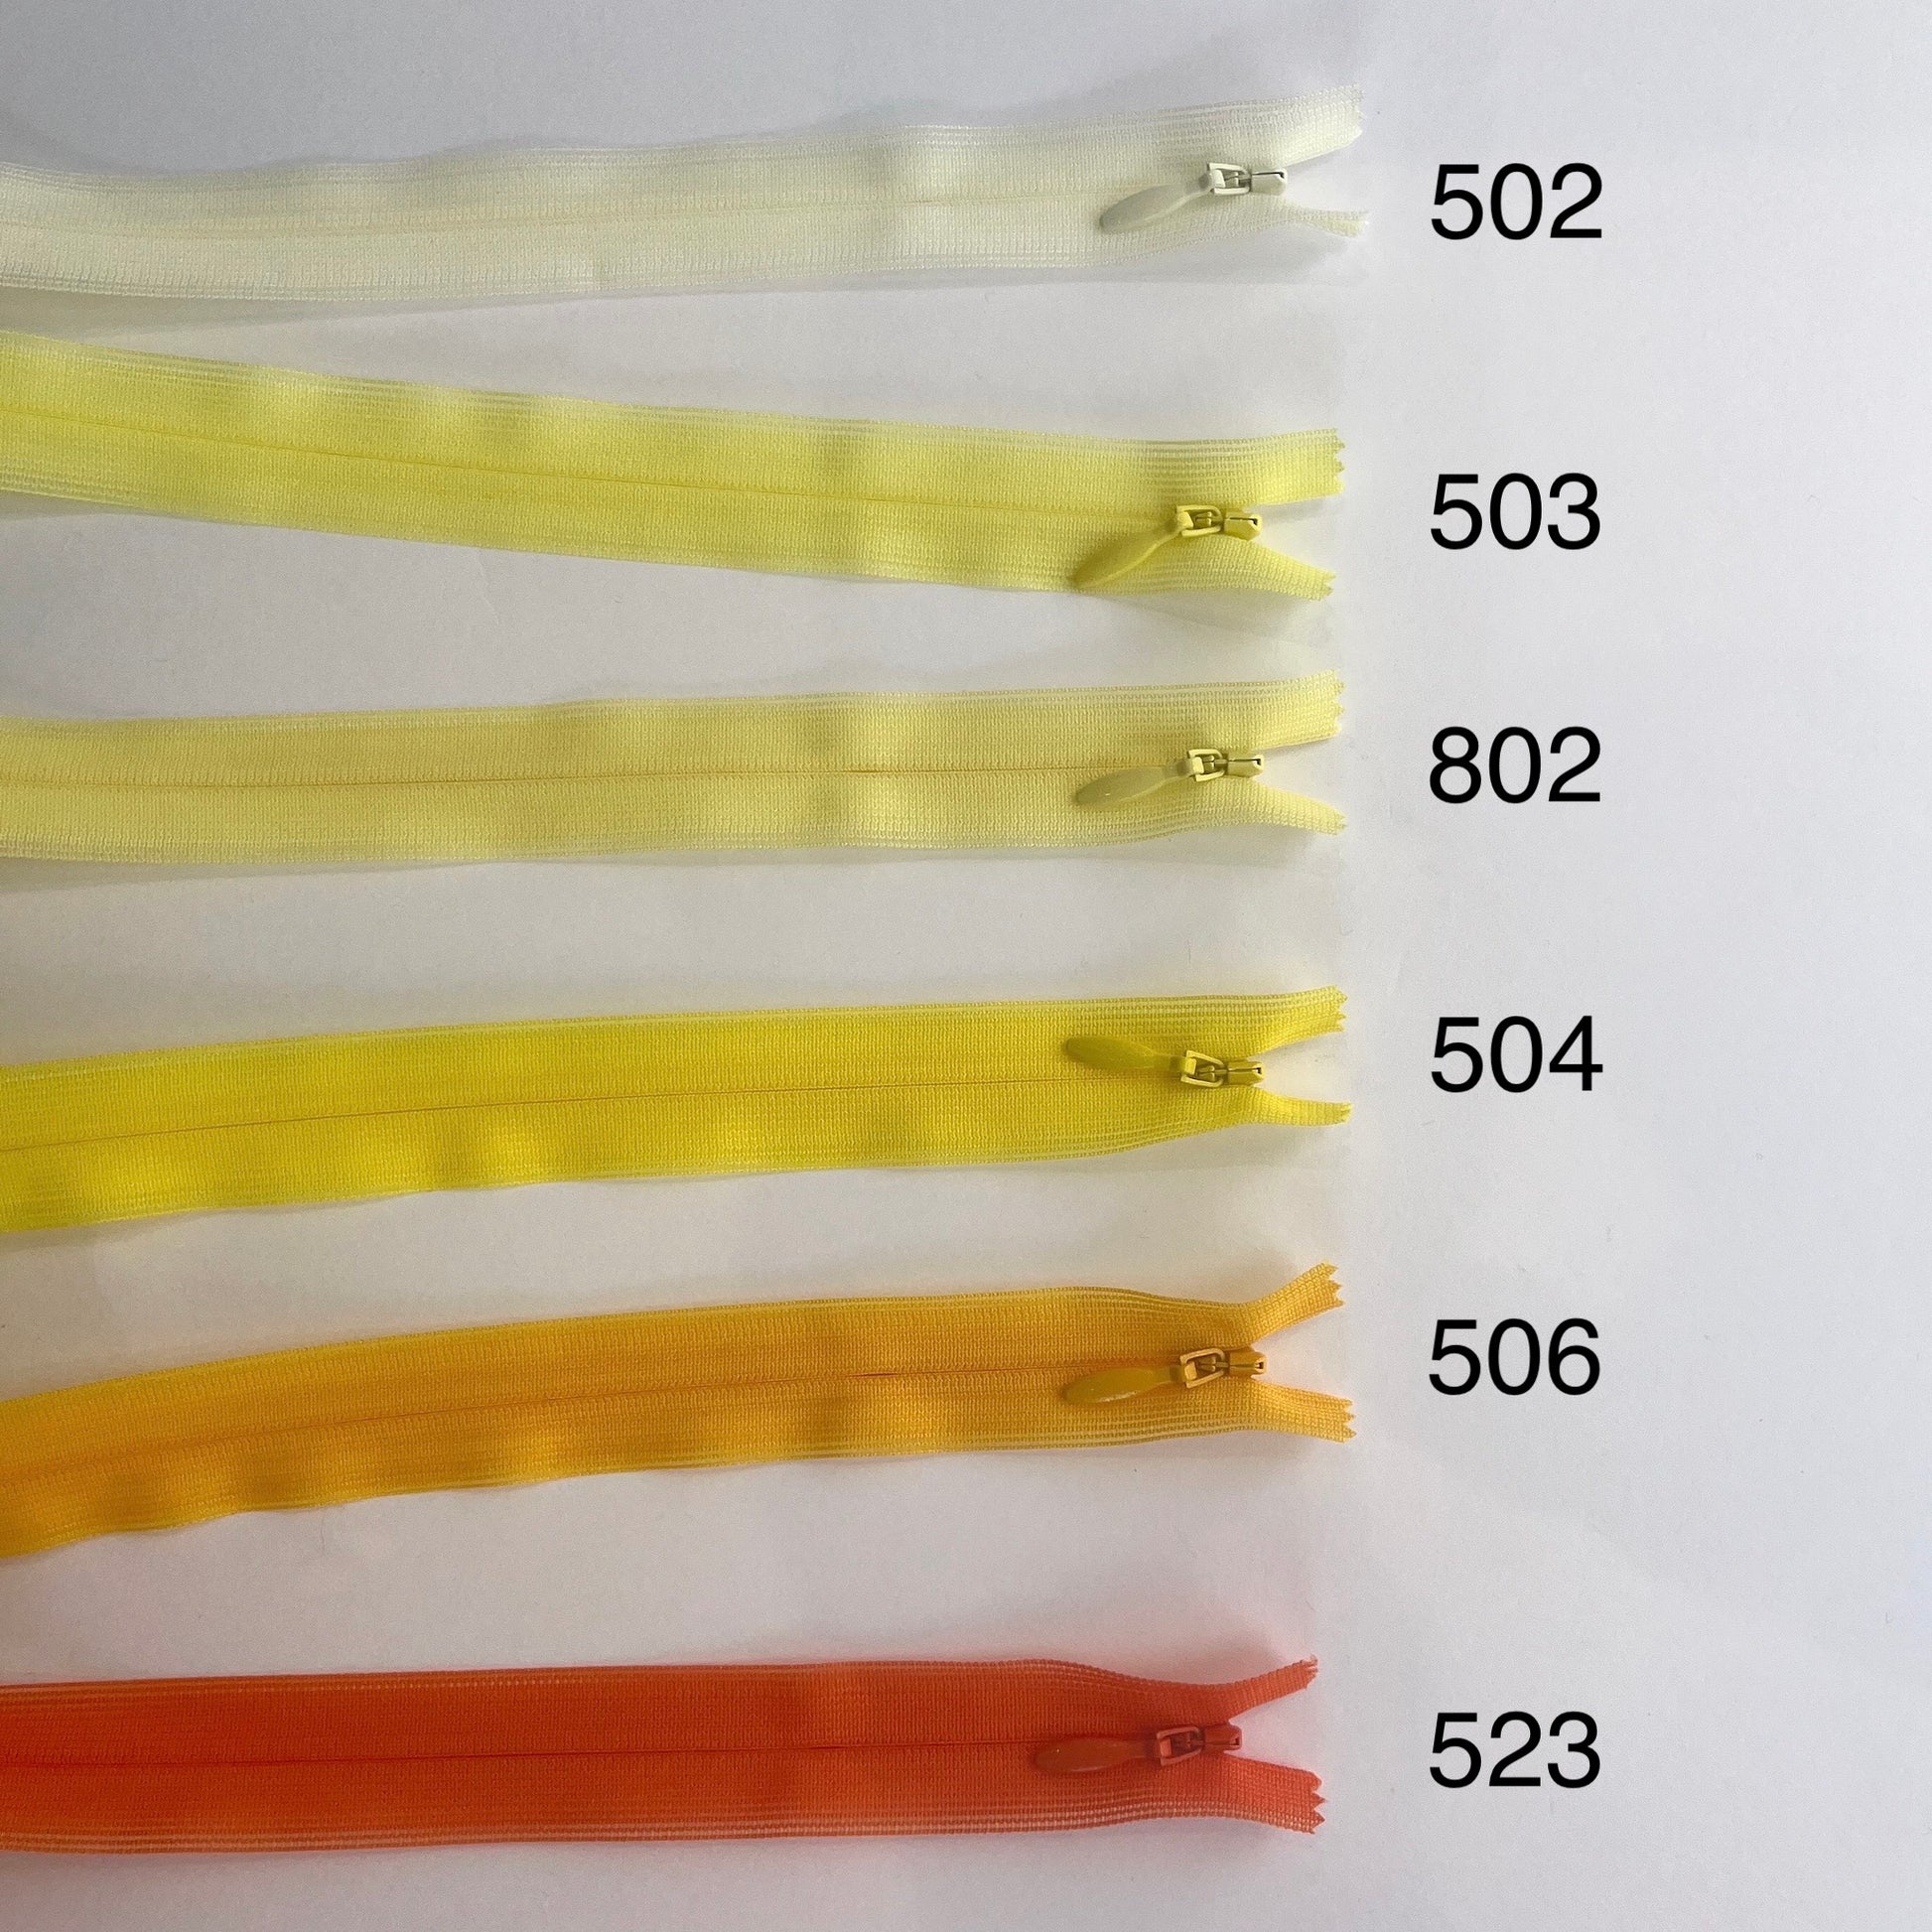 Ykk Lightweight Invisible zip in yellow/orange/red/pinks - 66cm (26")